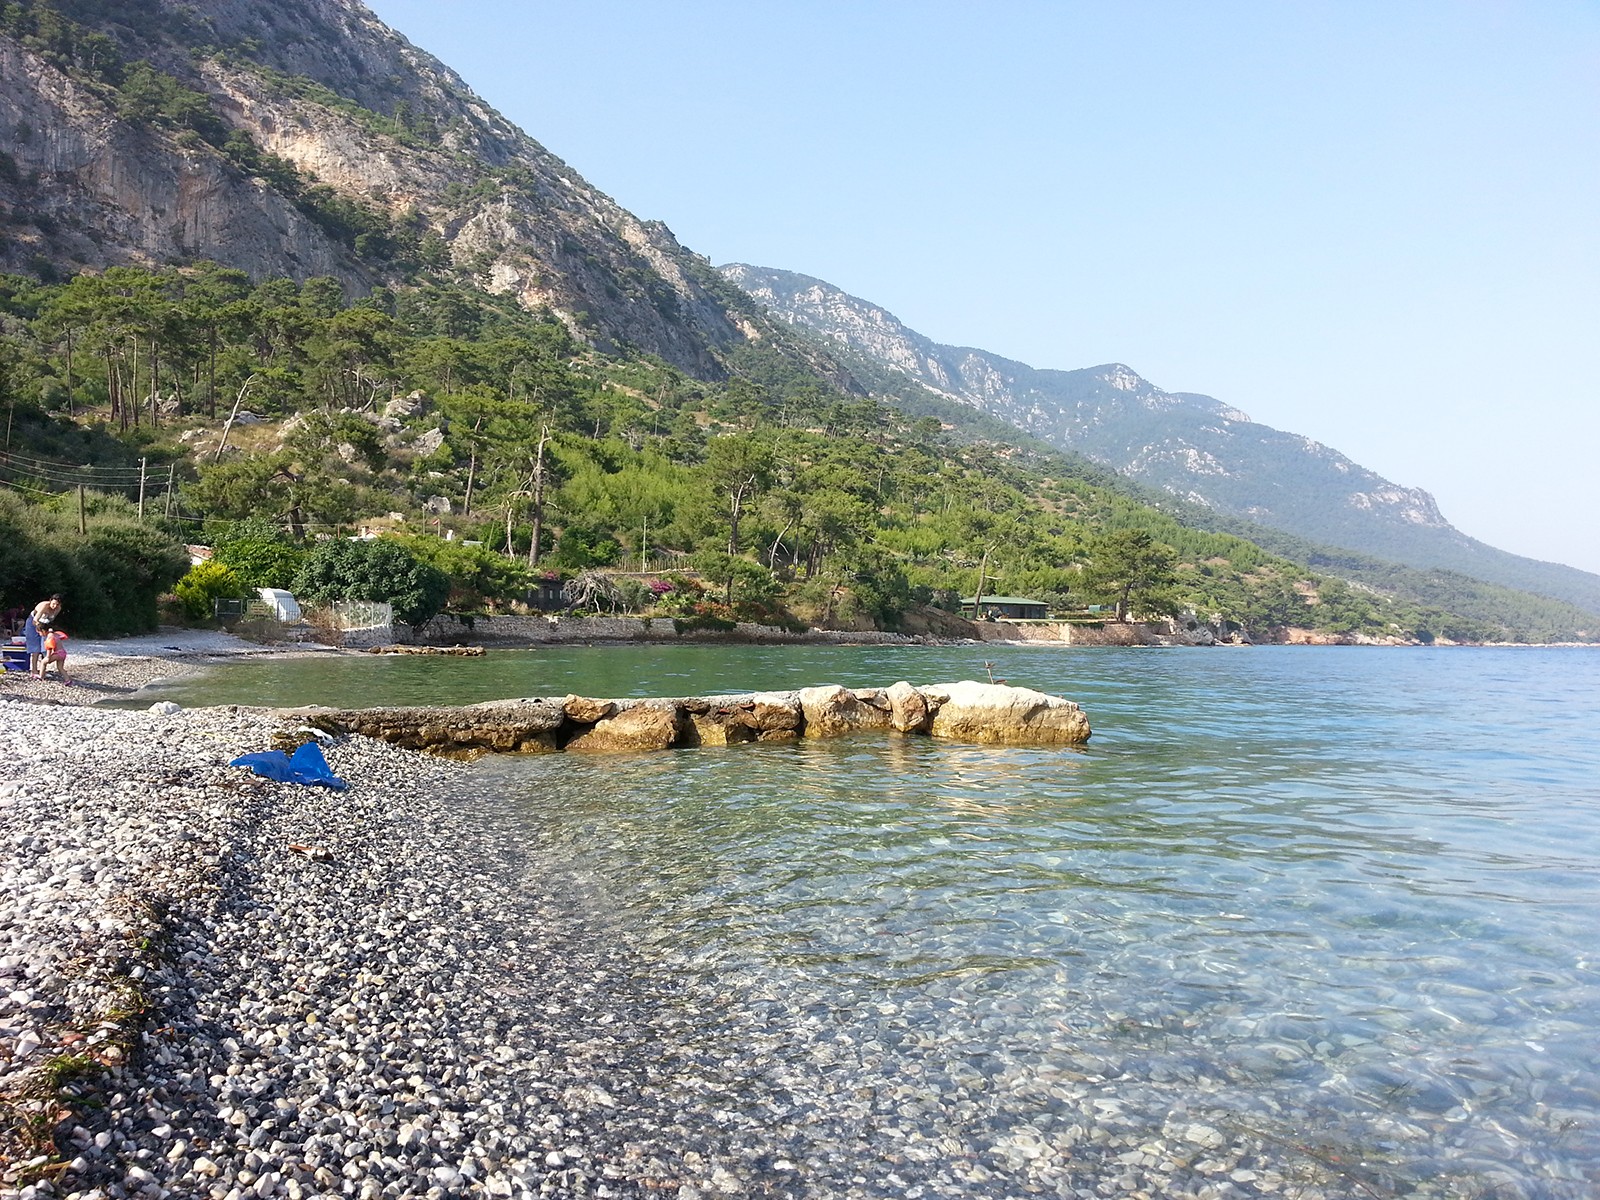 Fotografija Chardak beach z sivi kamenček površino